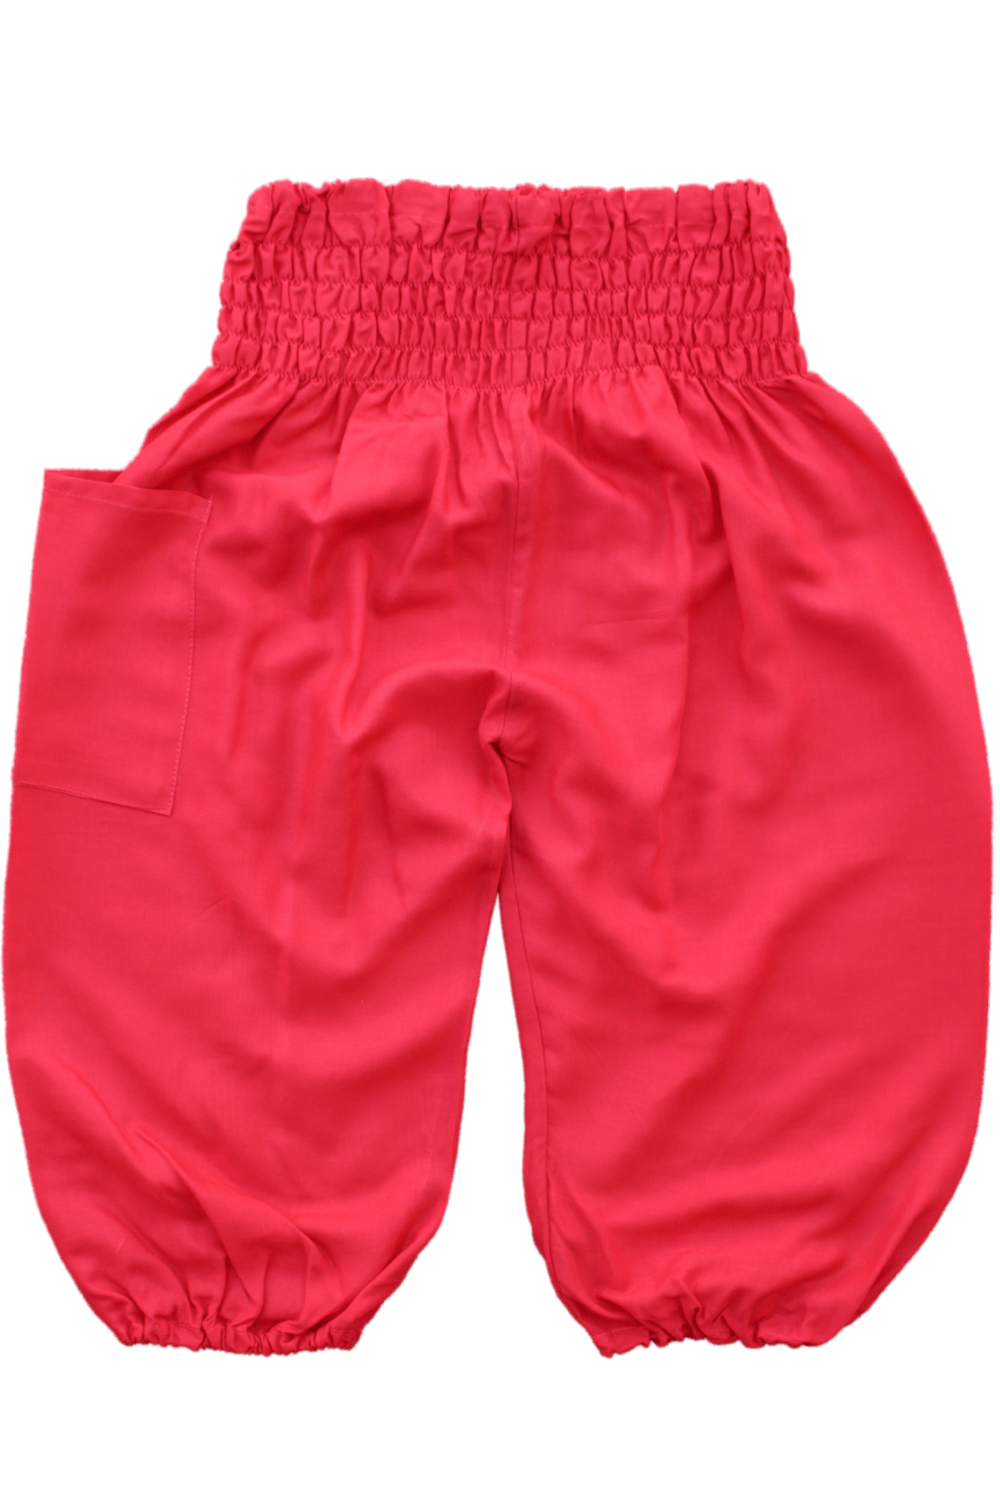 Plain Red Kids Harem Pants. Bohemian pants for children from Bohemian Island